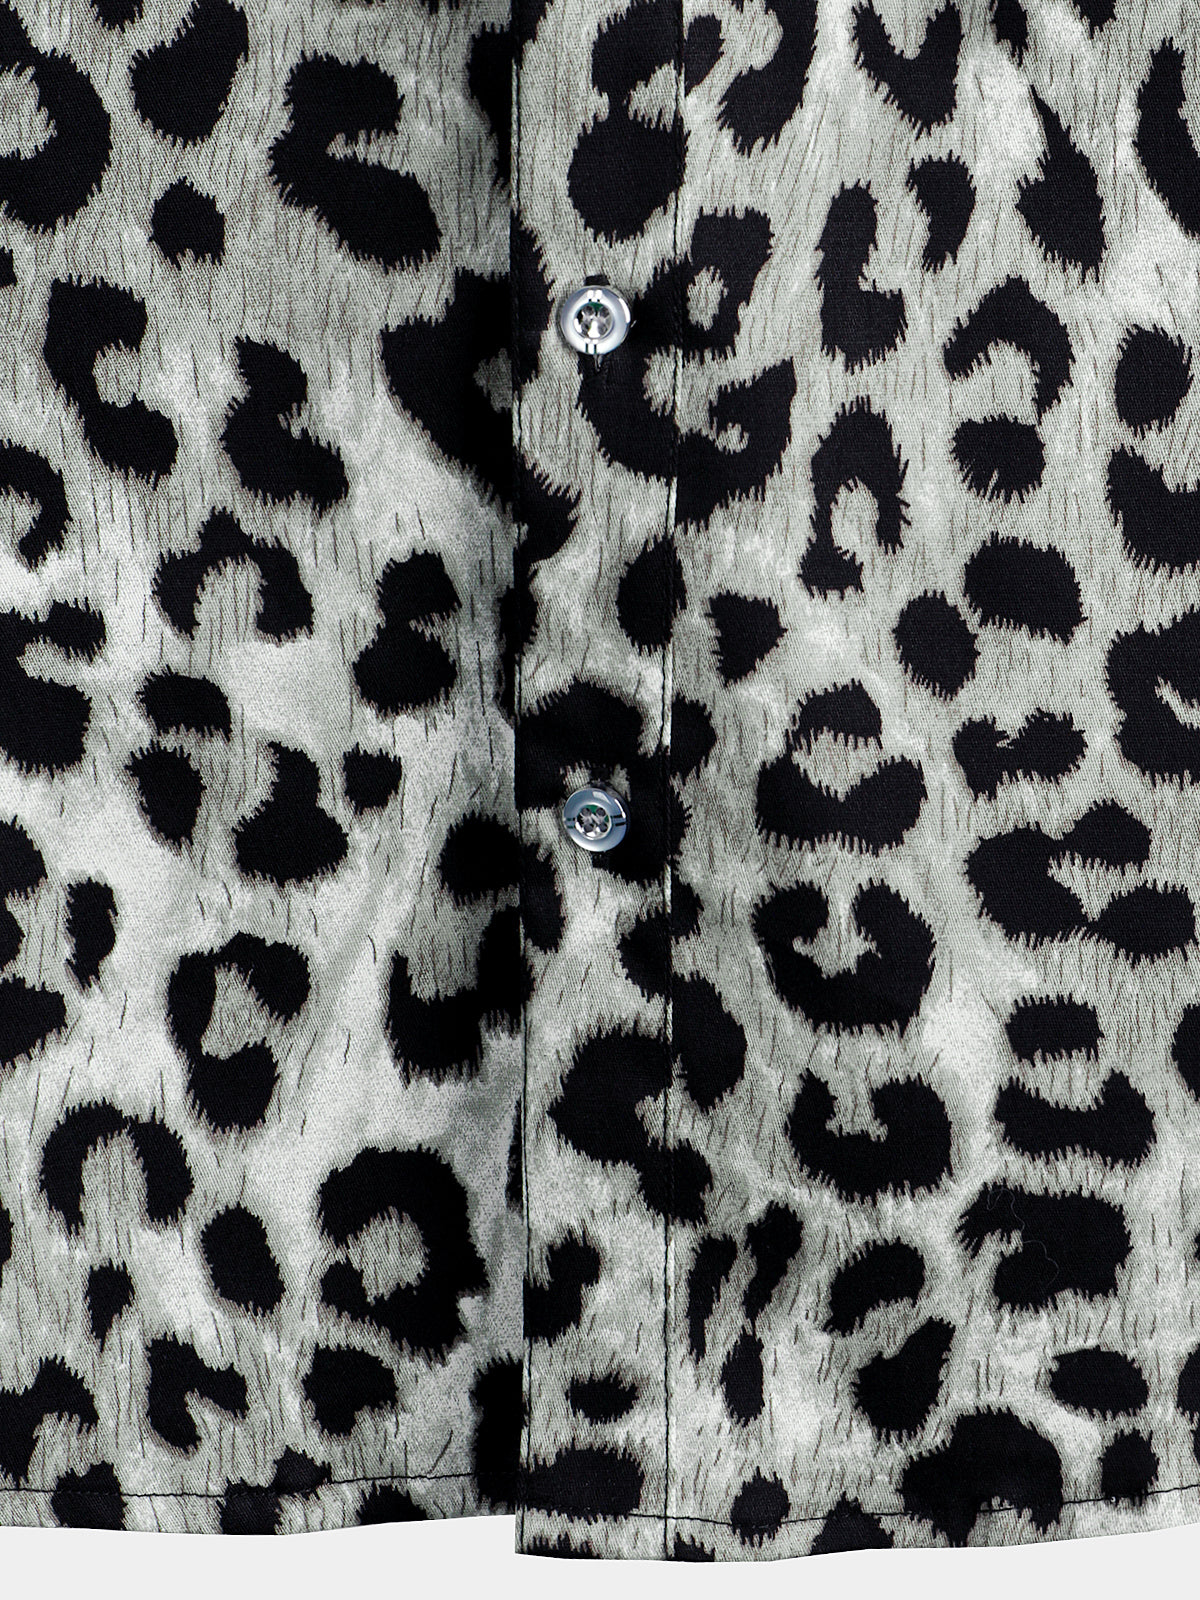 Men's Cotton Casual White Leopard Animal Print Cheetah Rock Short Slee ...